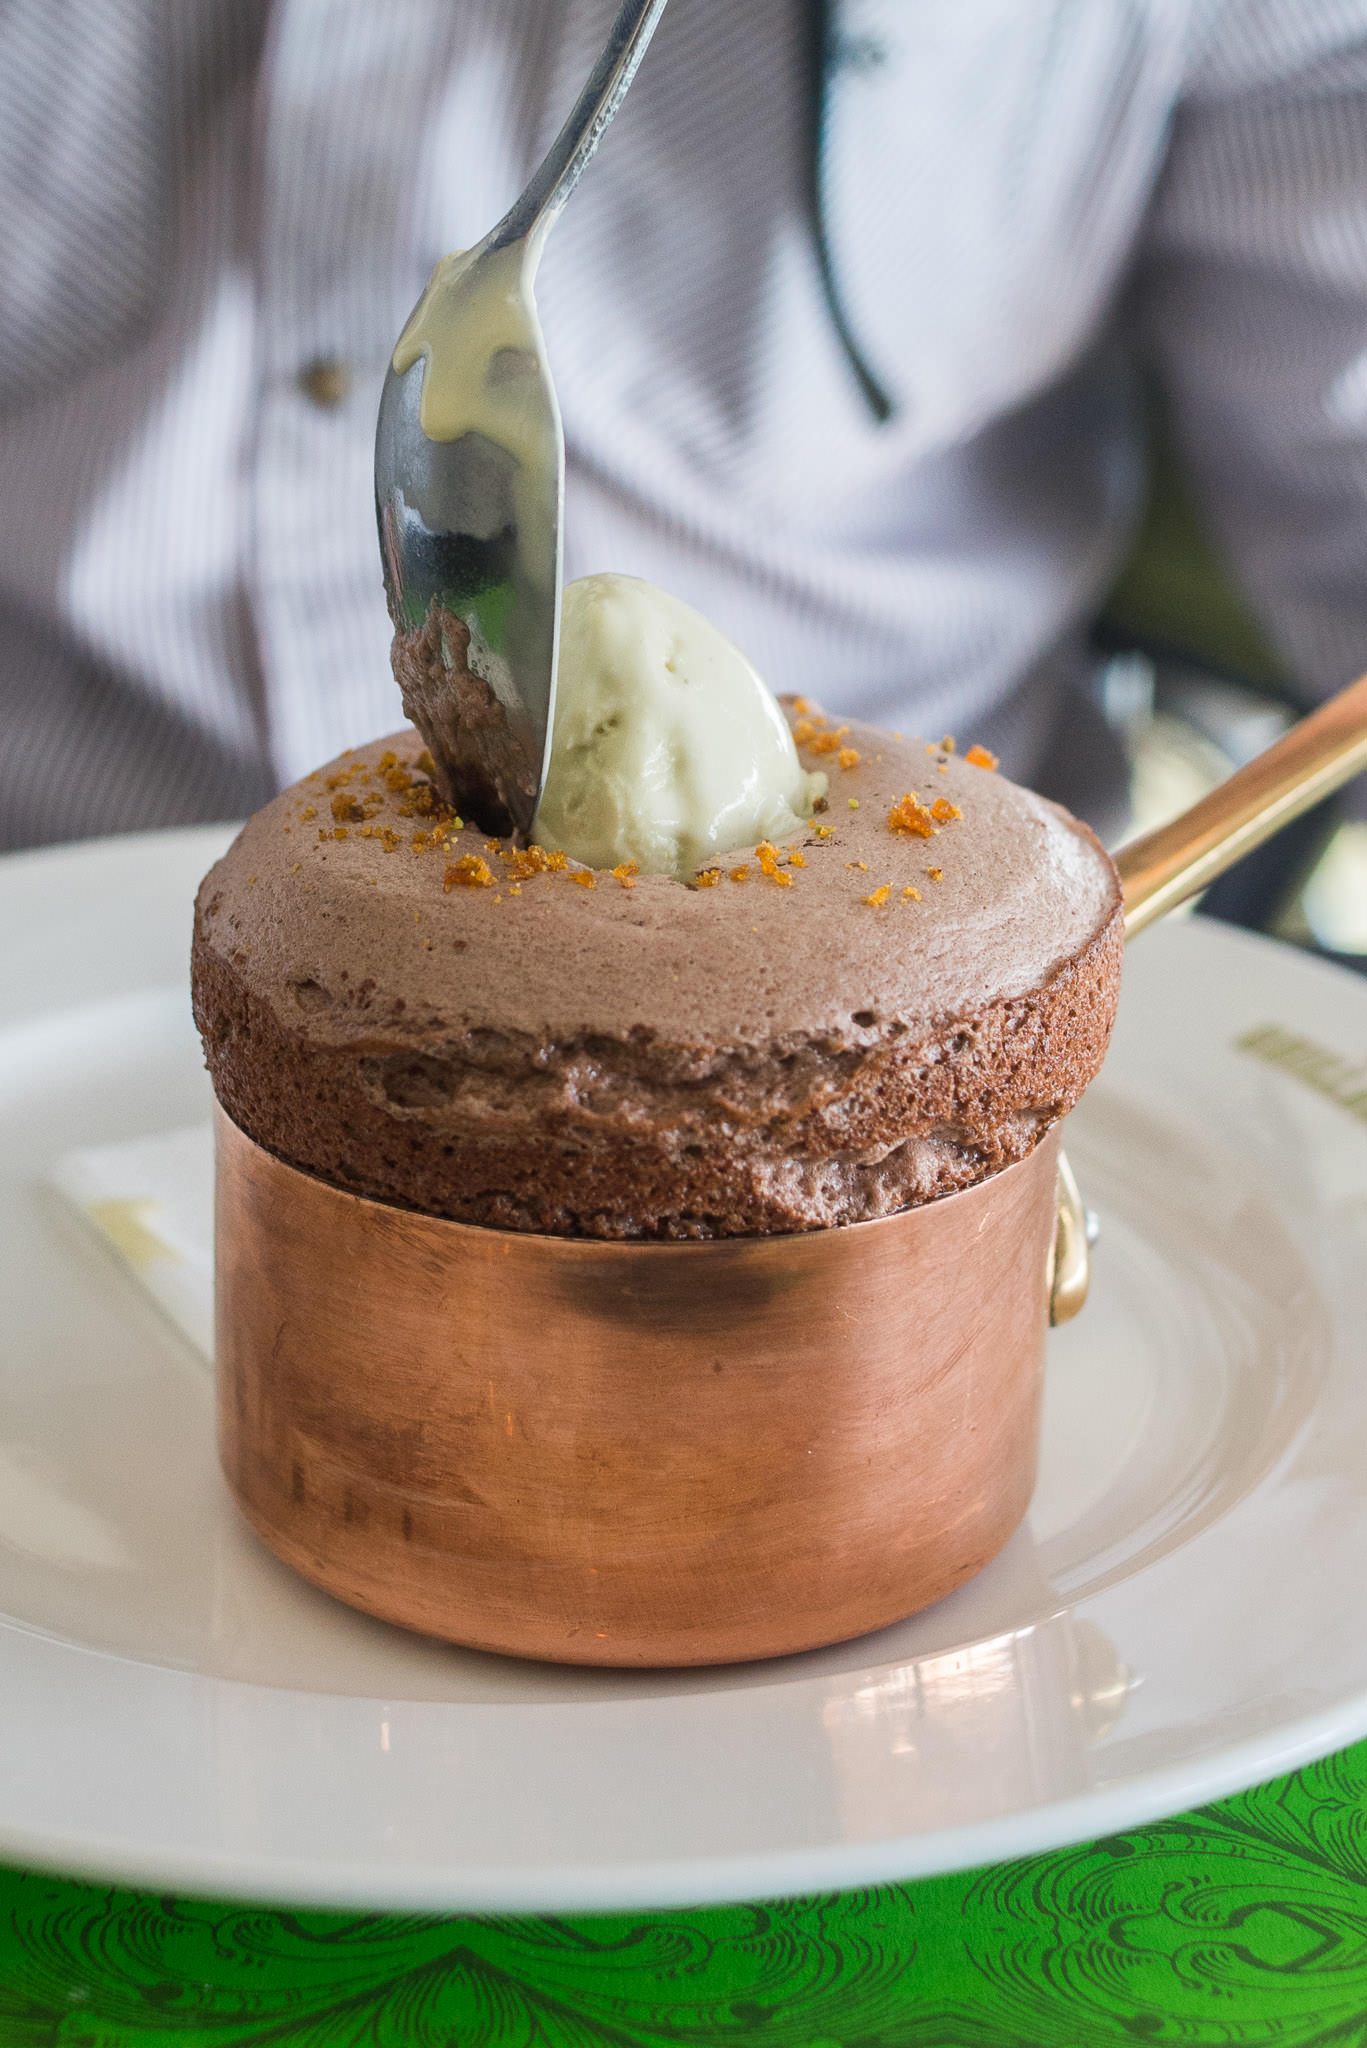 Chocolate soufflé with pistachio ice cream (AU$22)